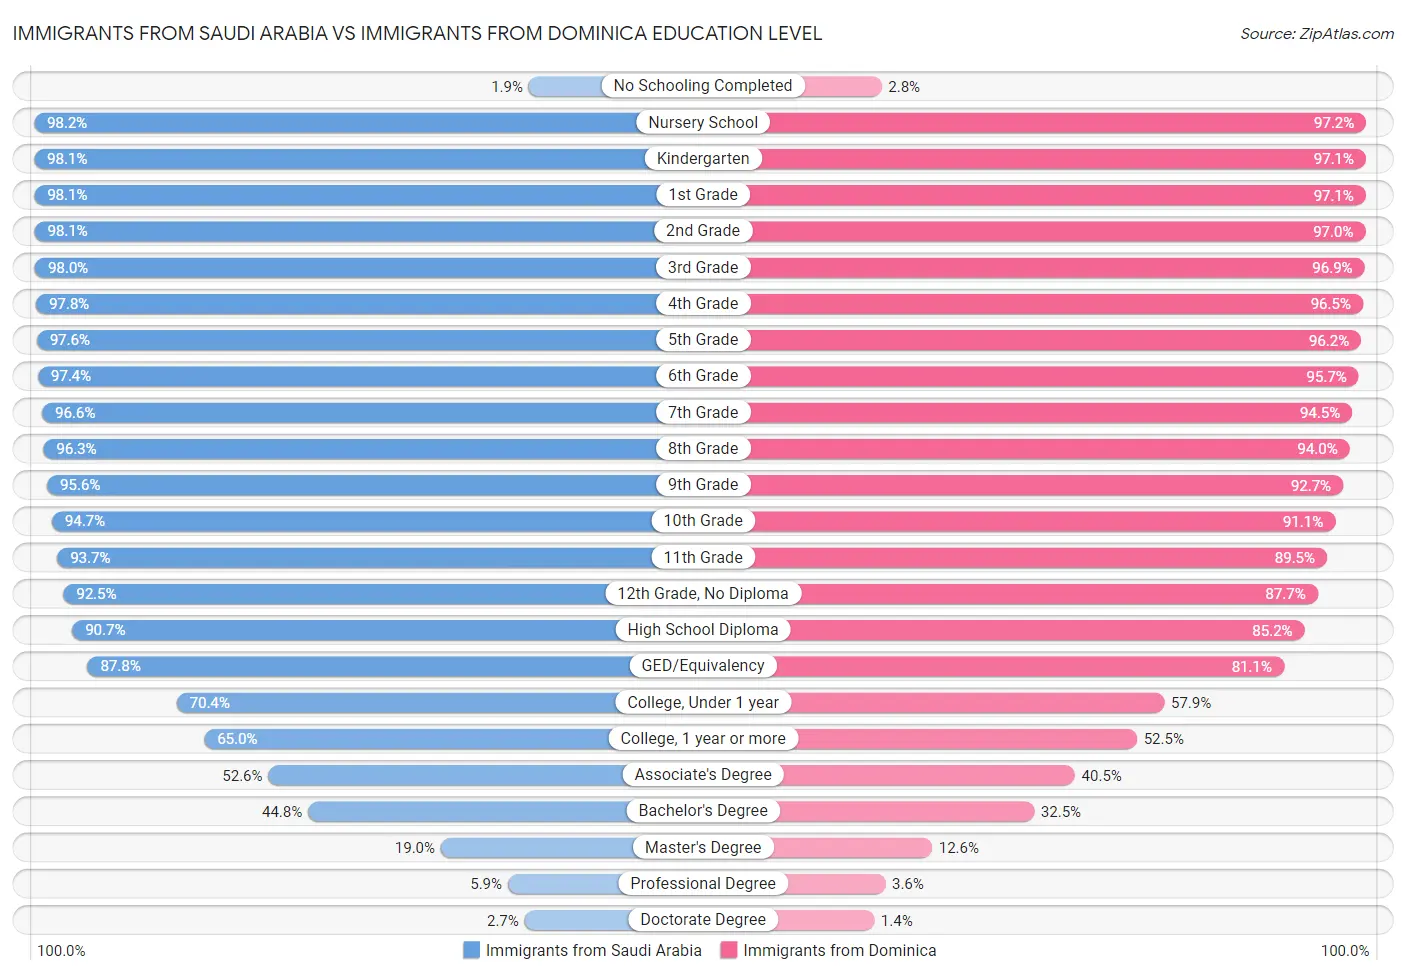 Immigrants from Saudi Arabia vs Immigrants from Dominica Education Level